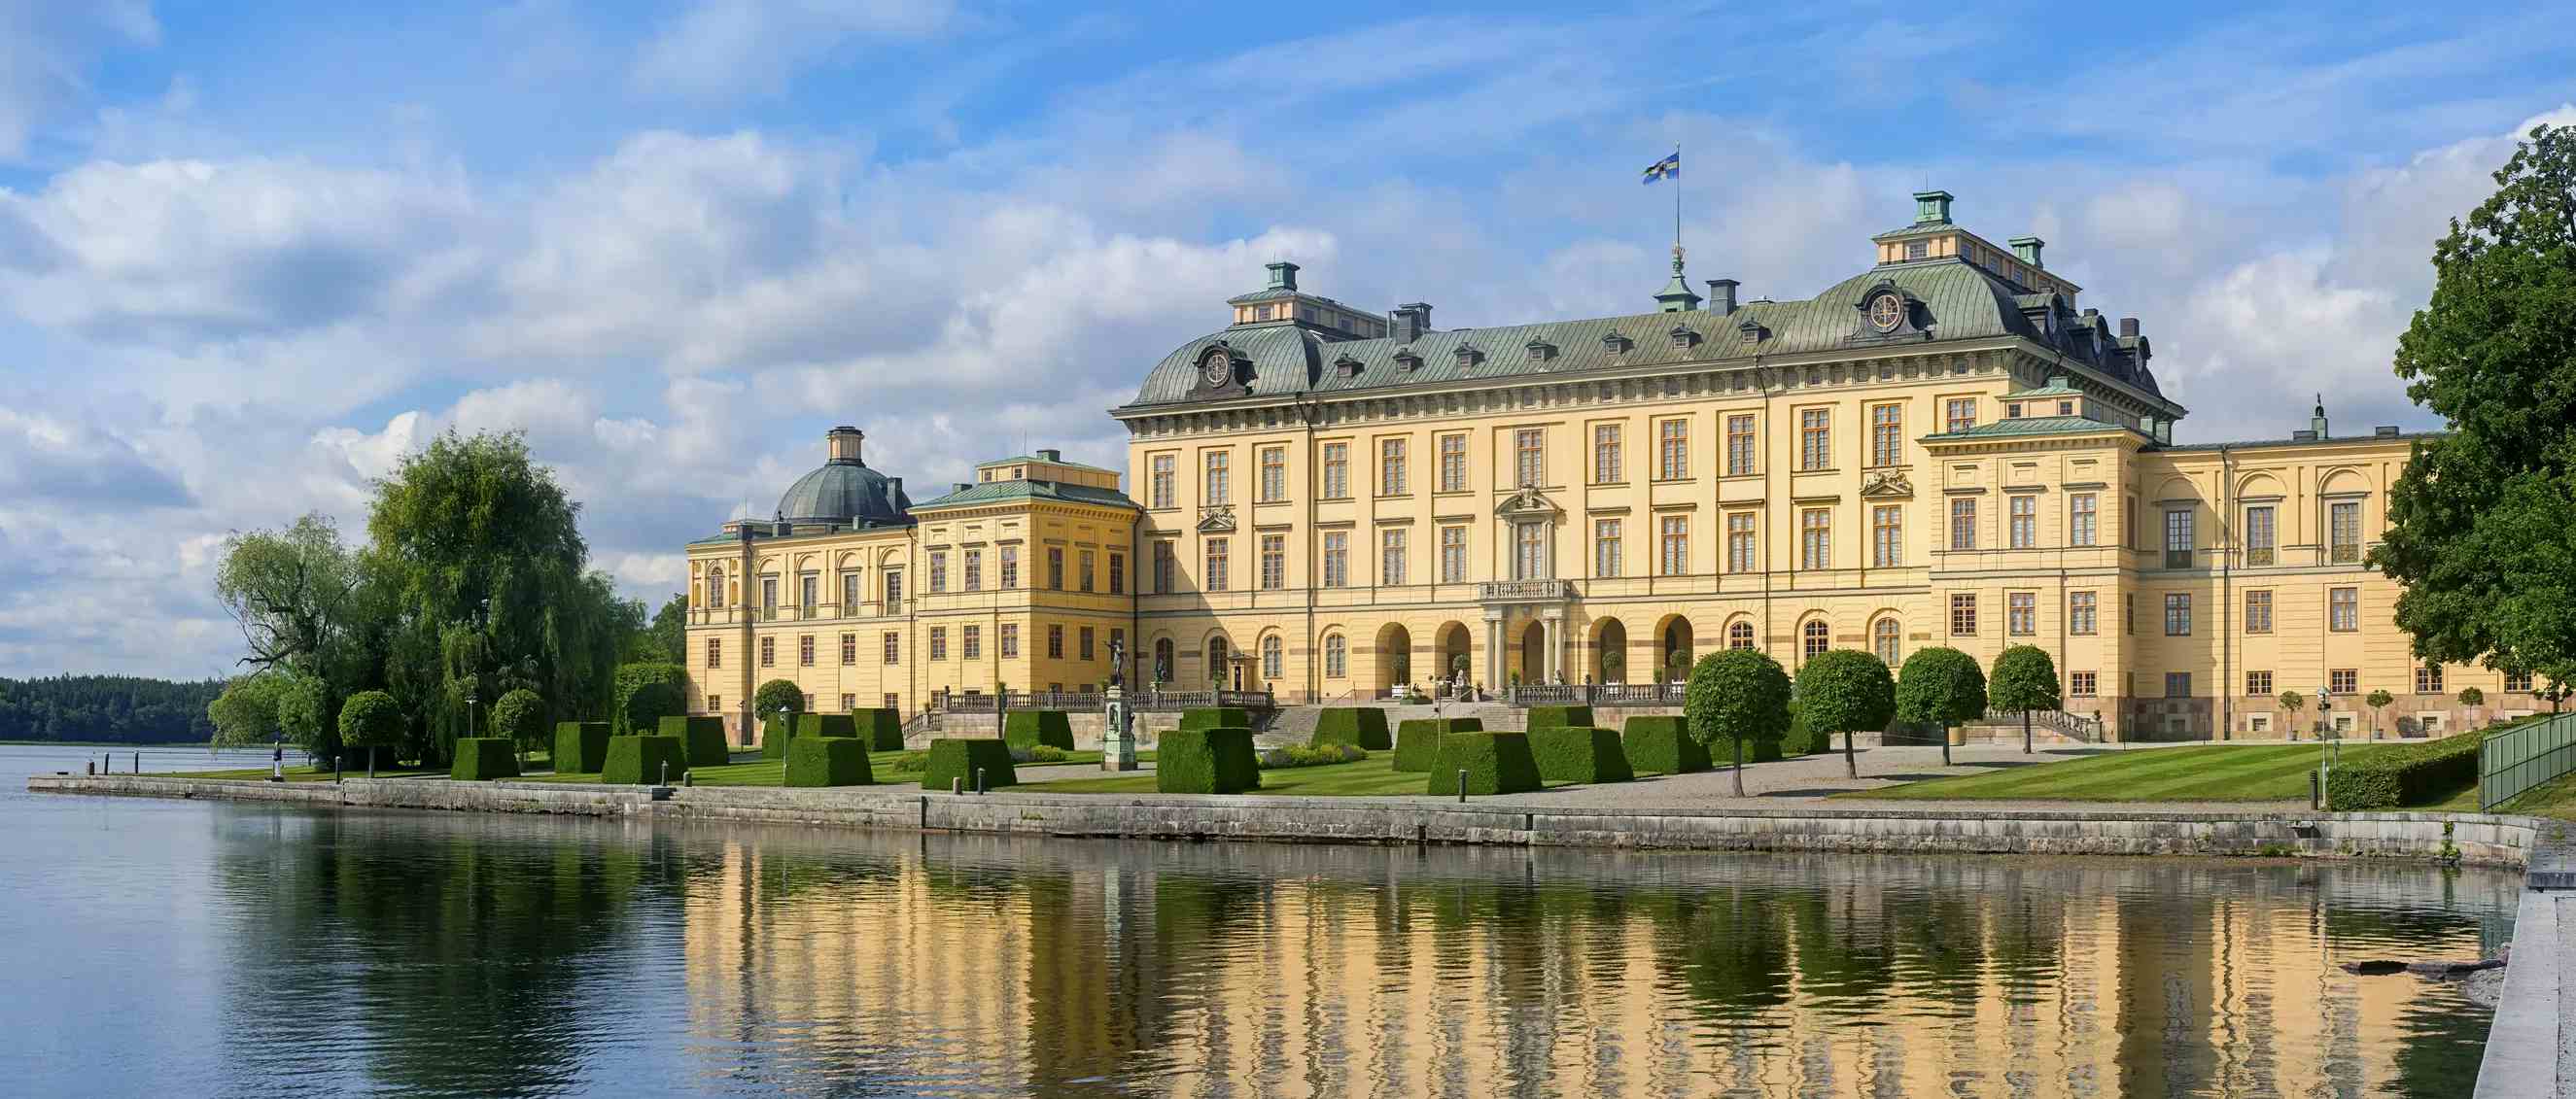 Palacio de Drottningholm image